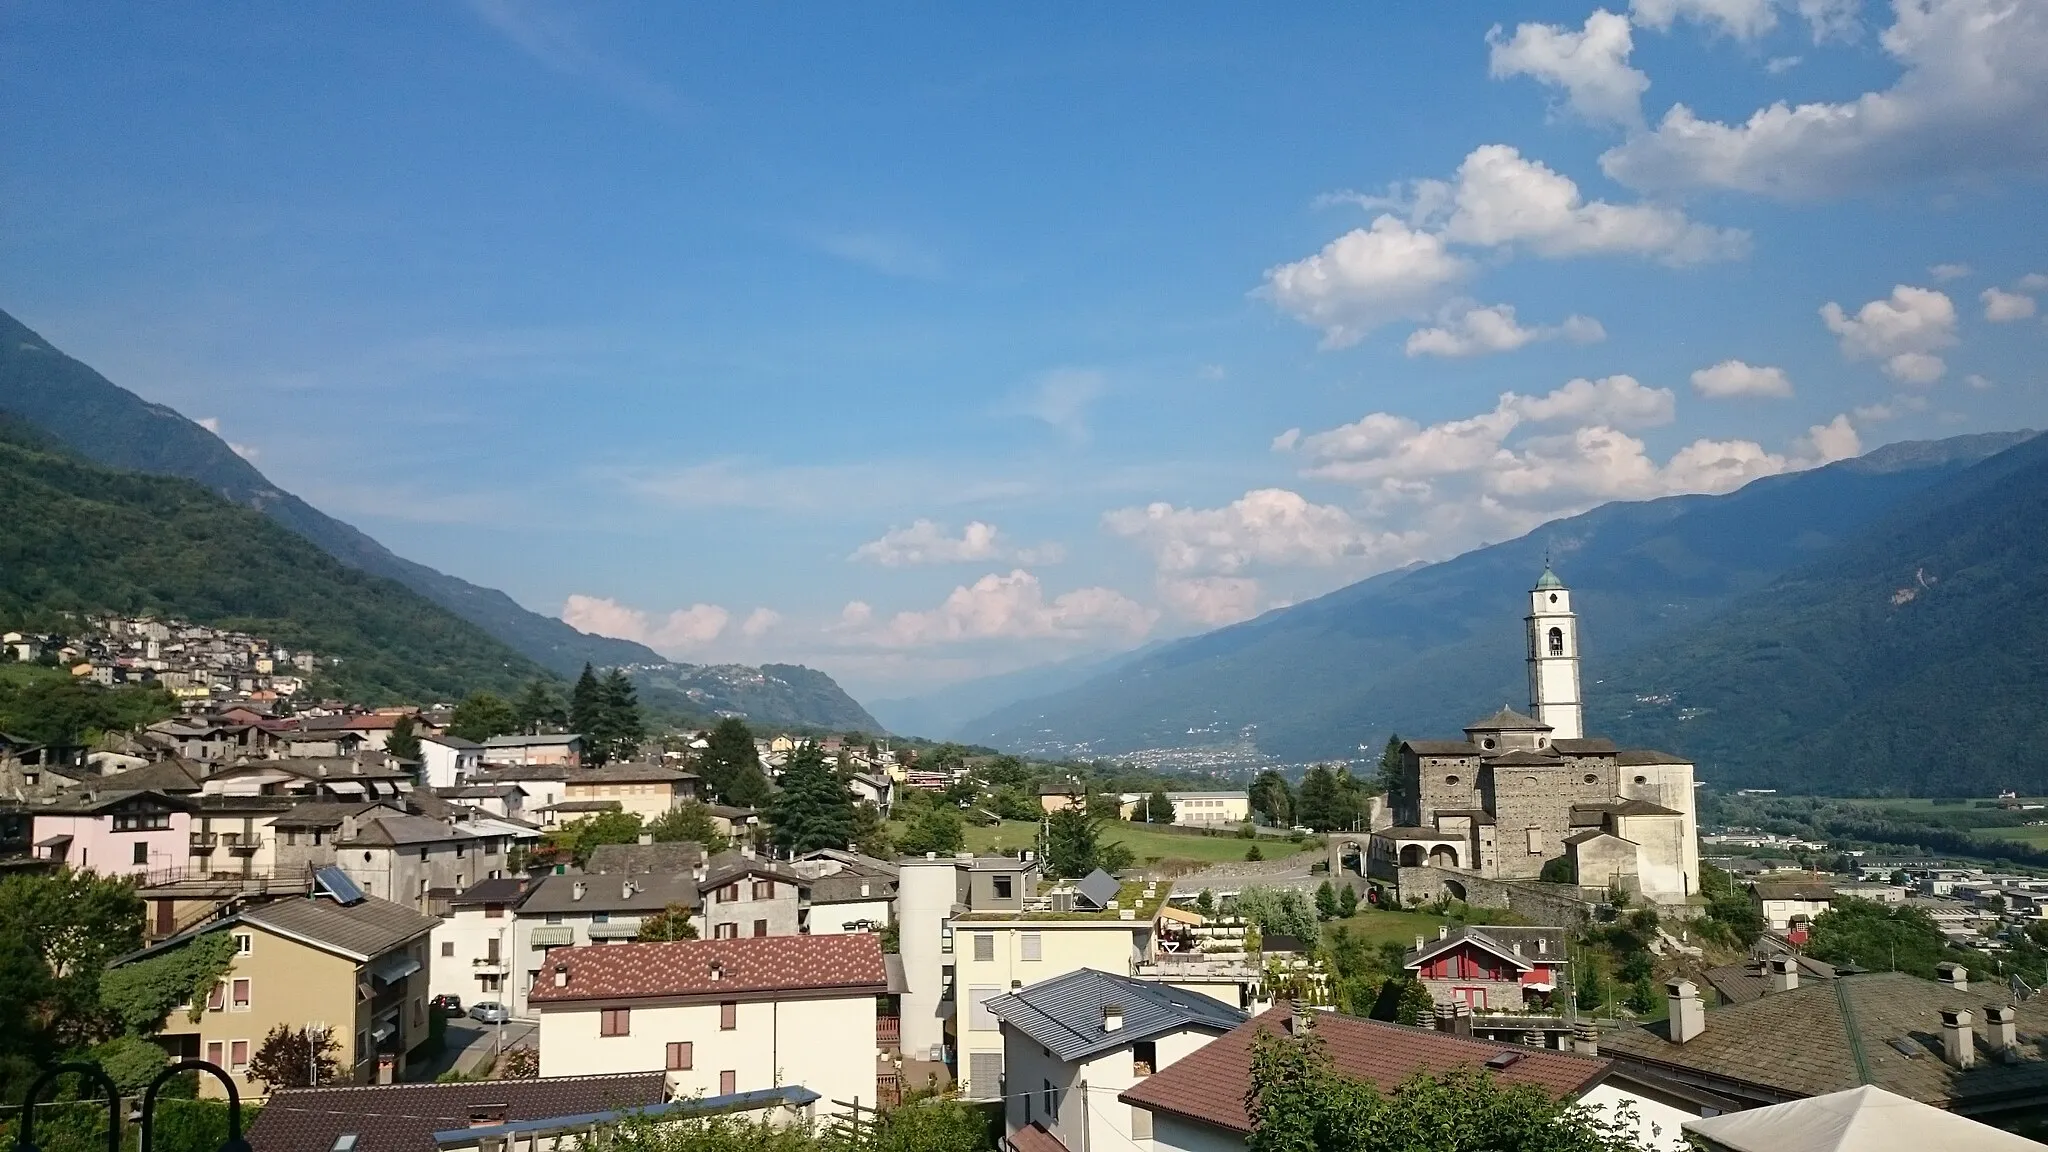 Image of Berbenno di Valtellina